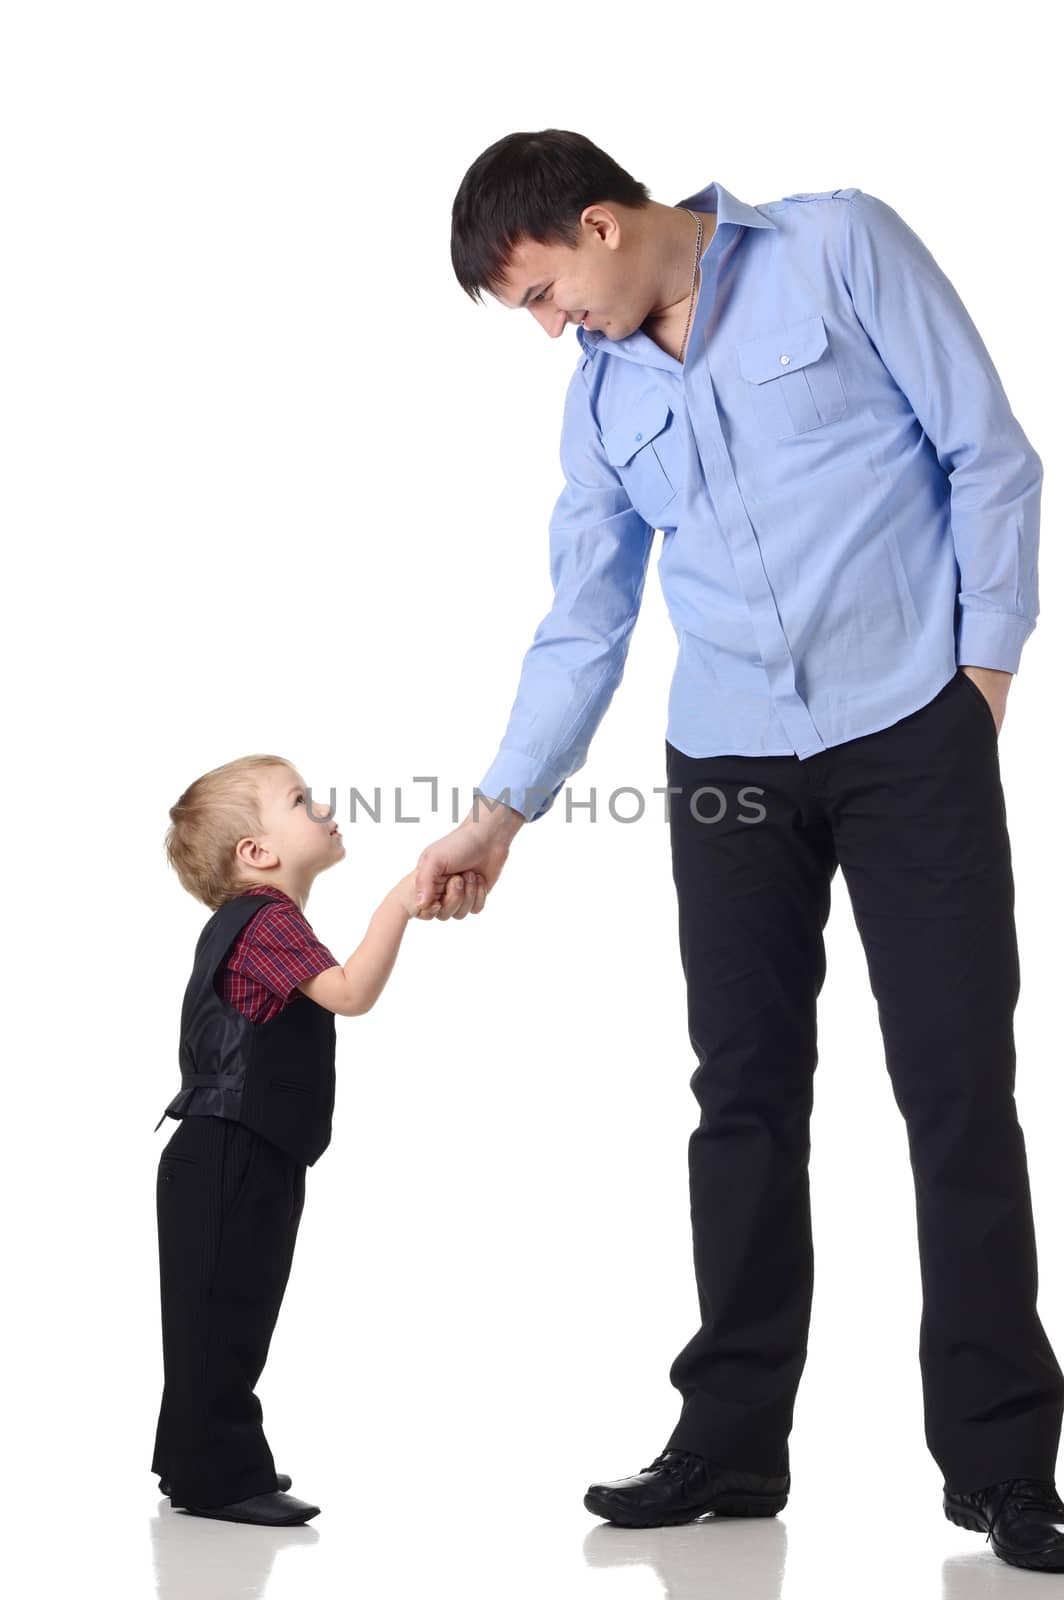 Handshake of a man and boy by dedmorozz